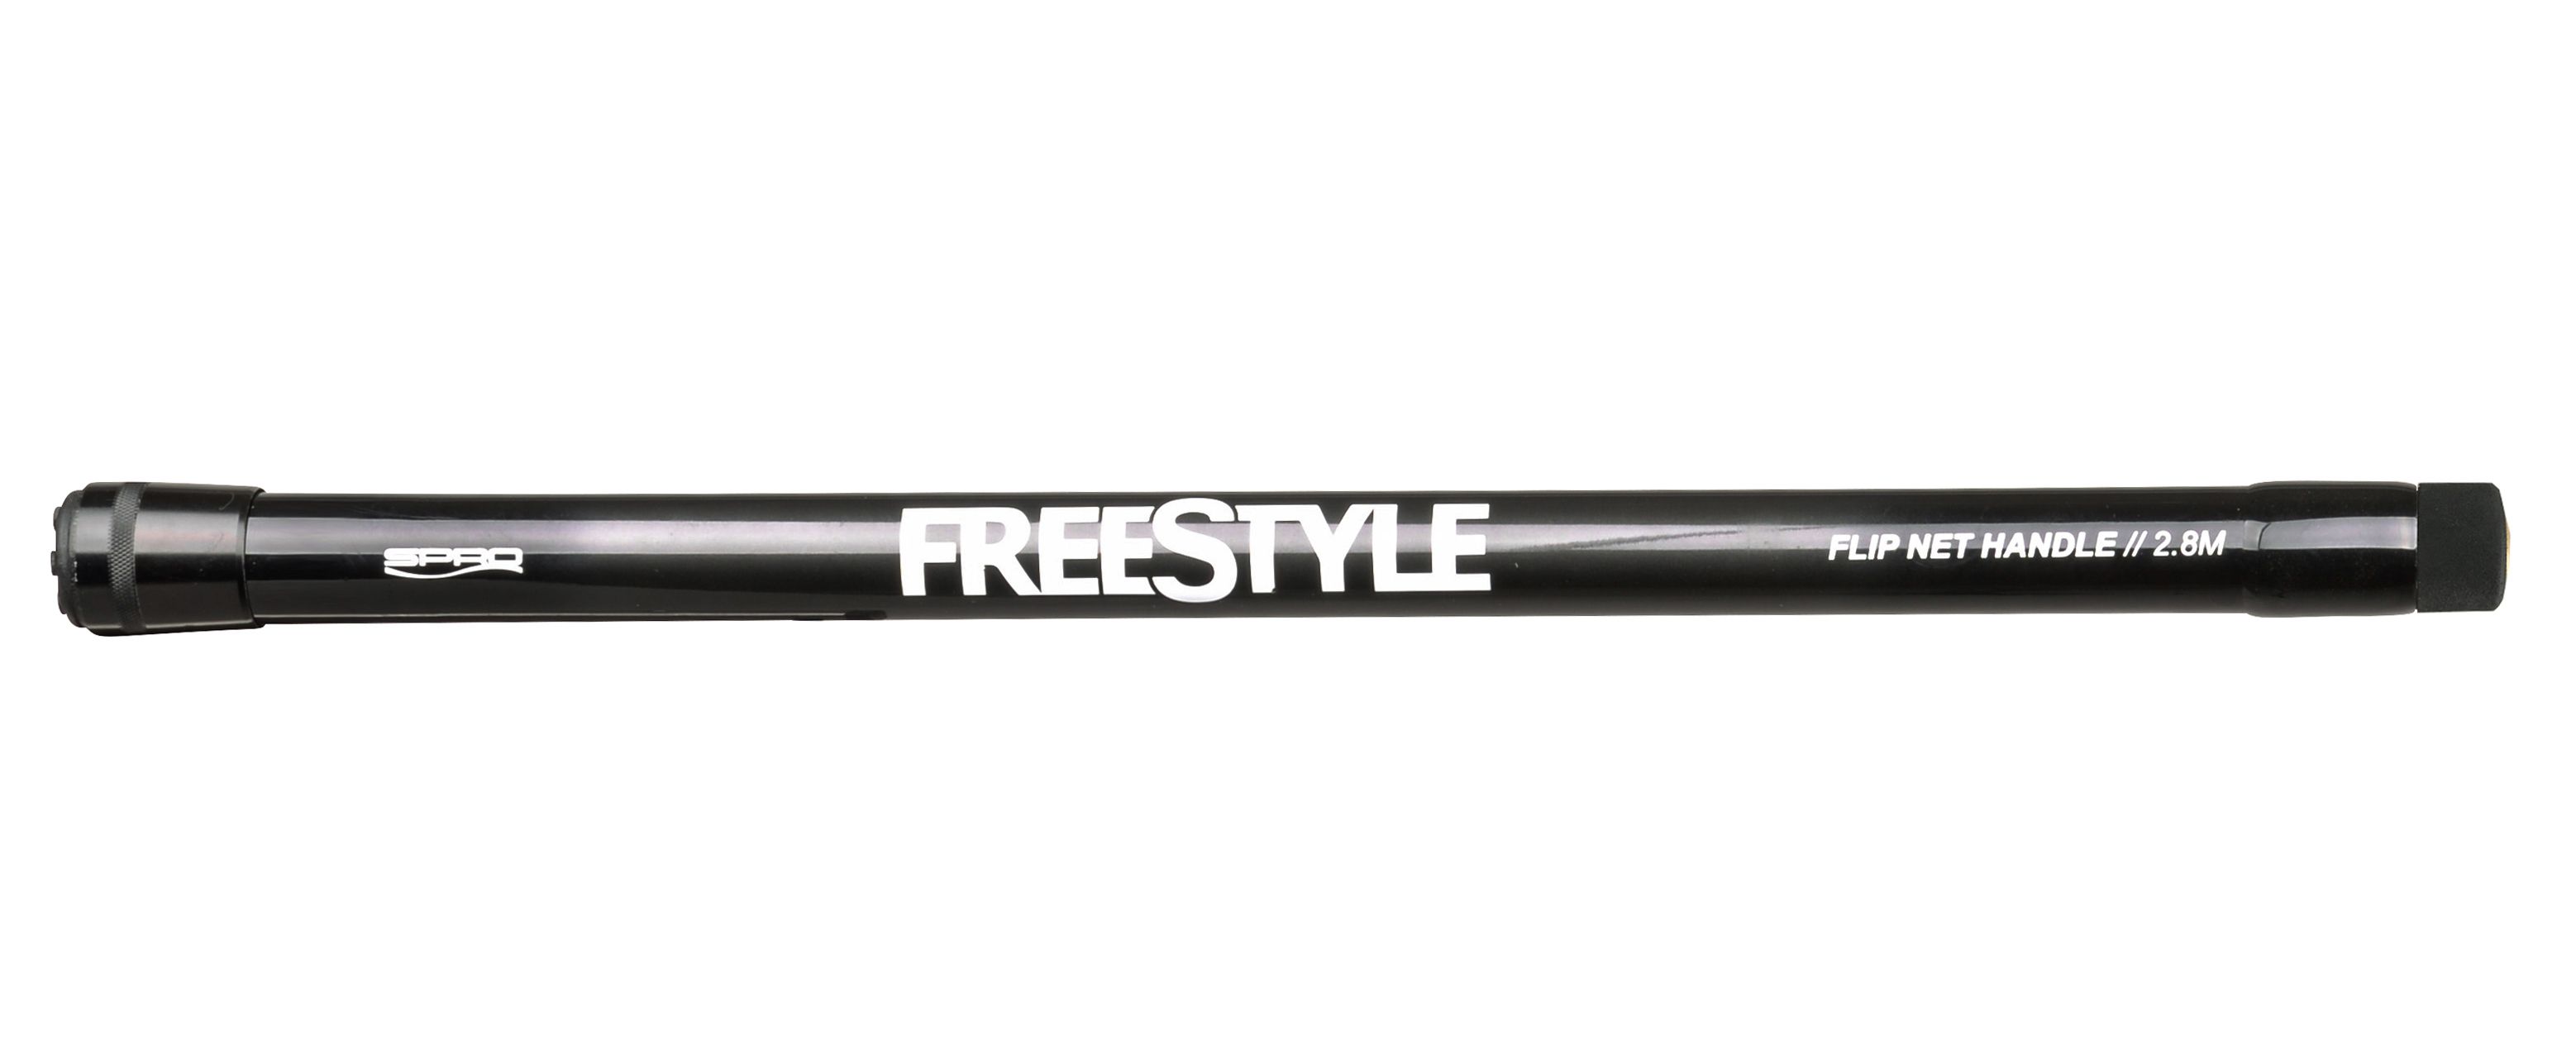 Ручка для подсака SPRO FreeStyle Flip Nethandle 2,8м - фото 1